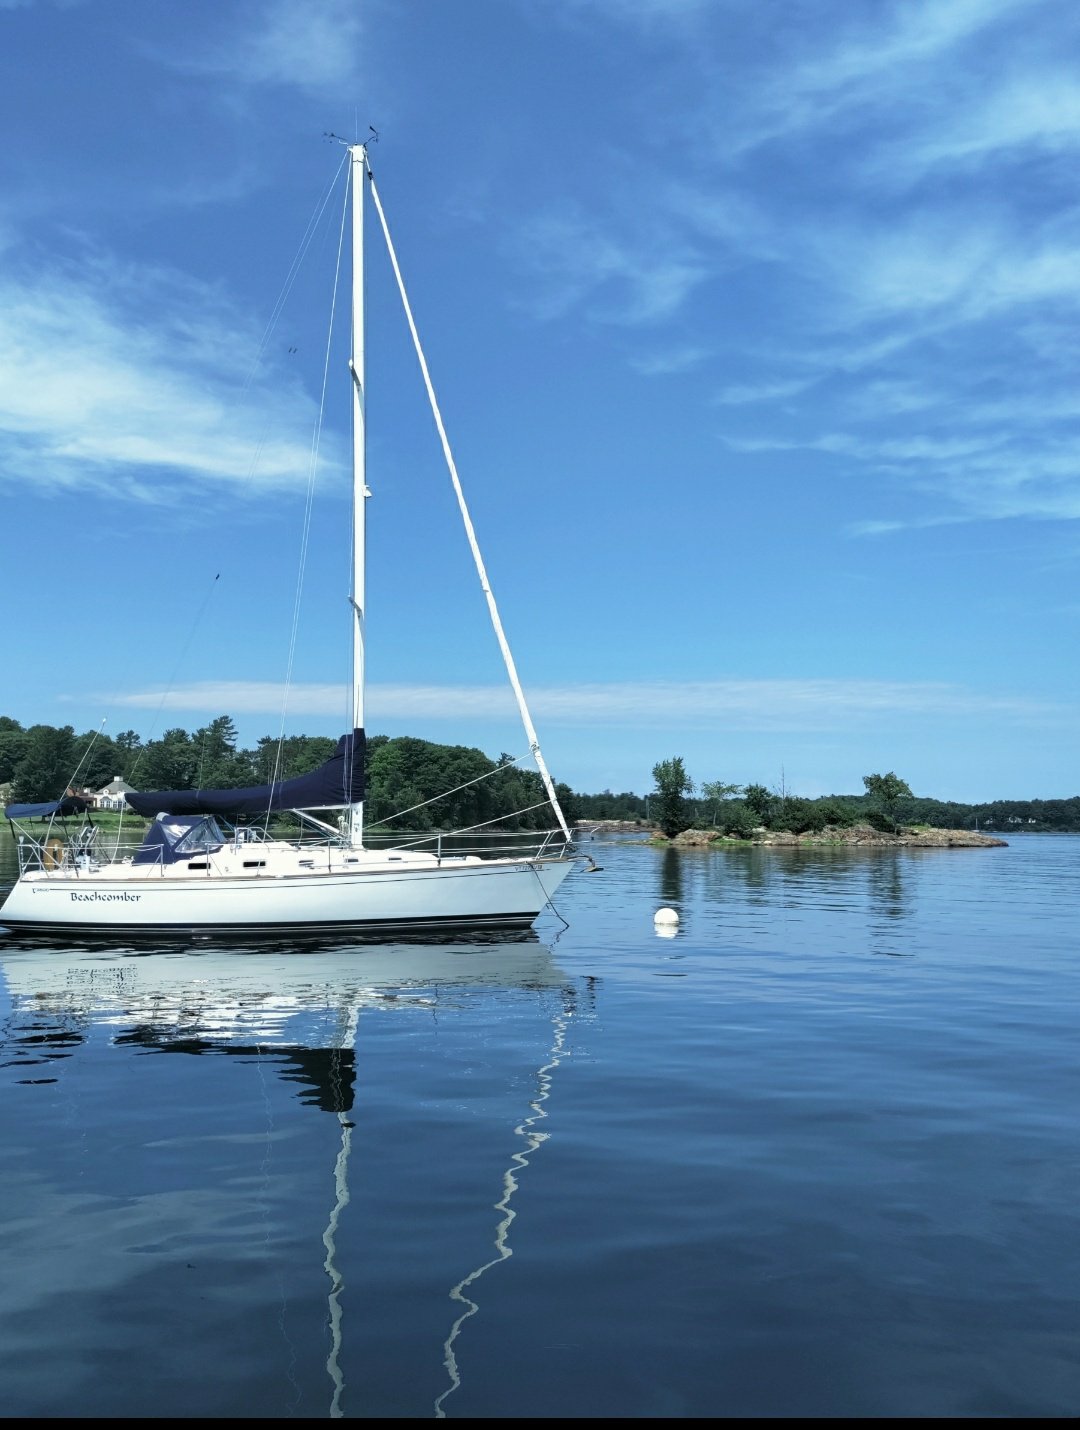 A Boat's reflection on Lake Champlain